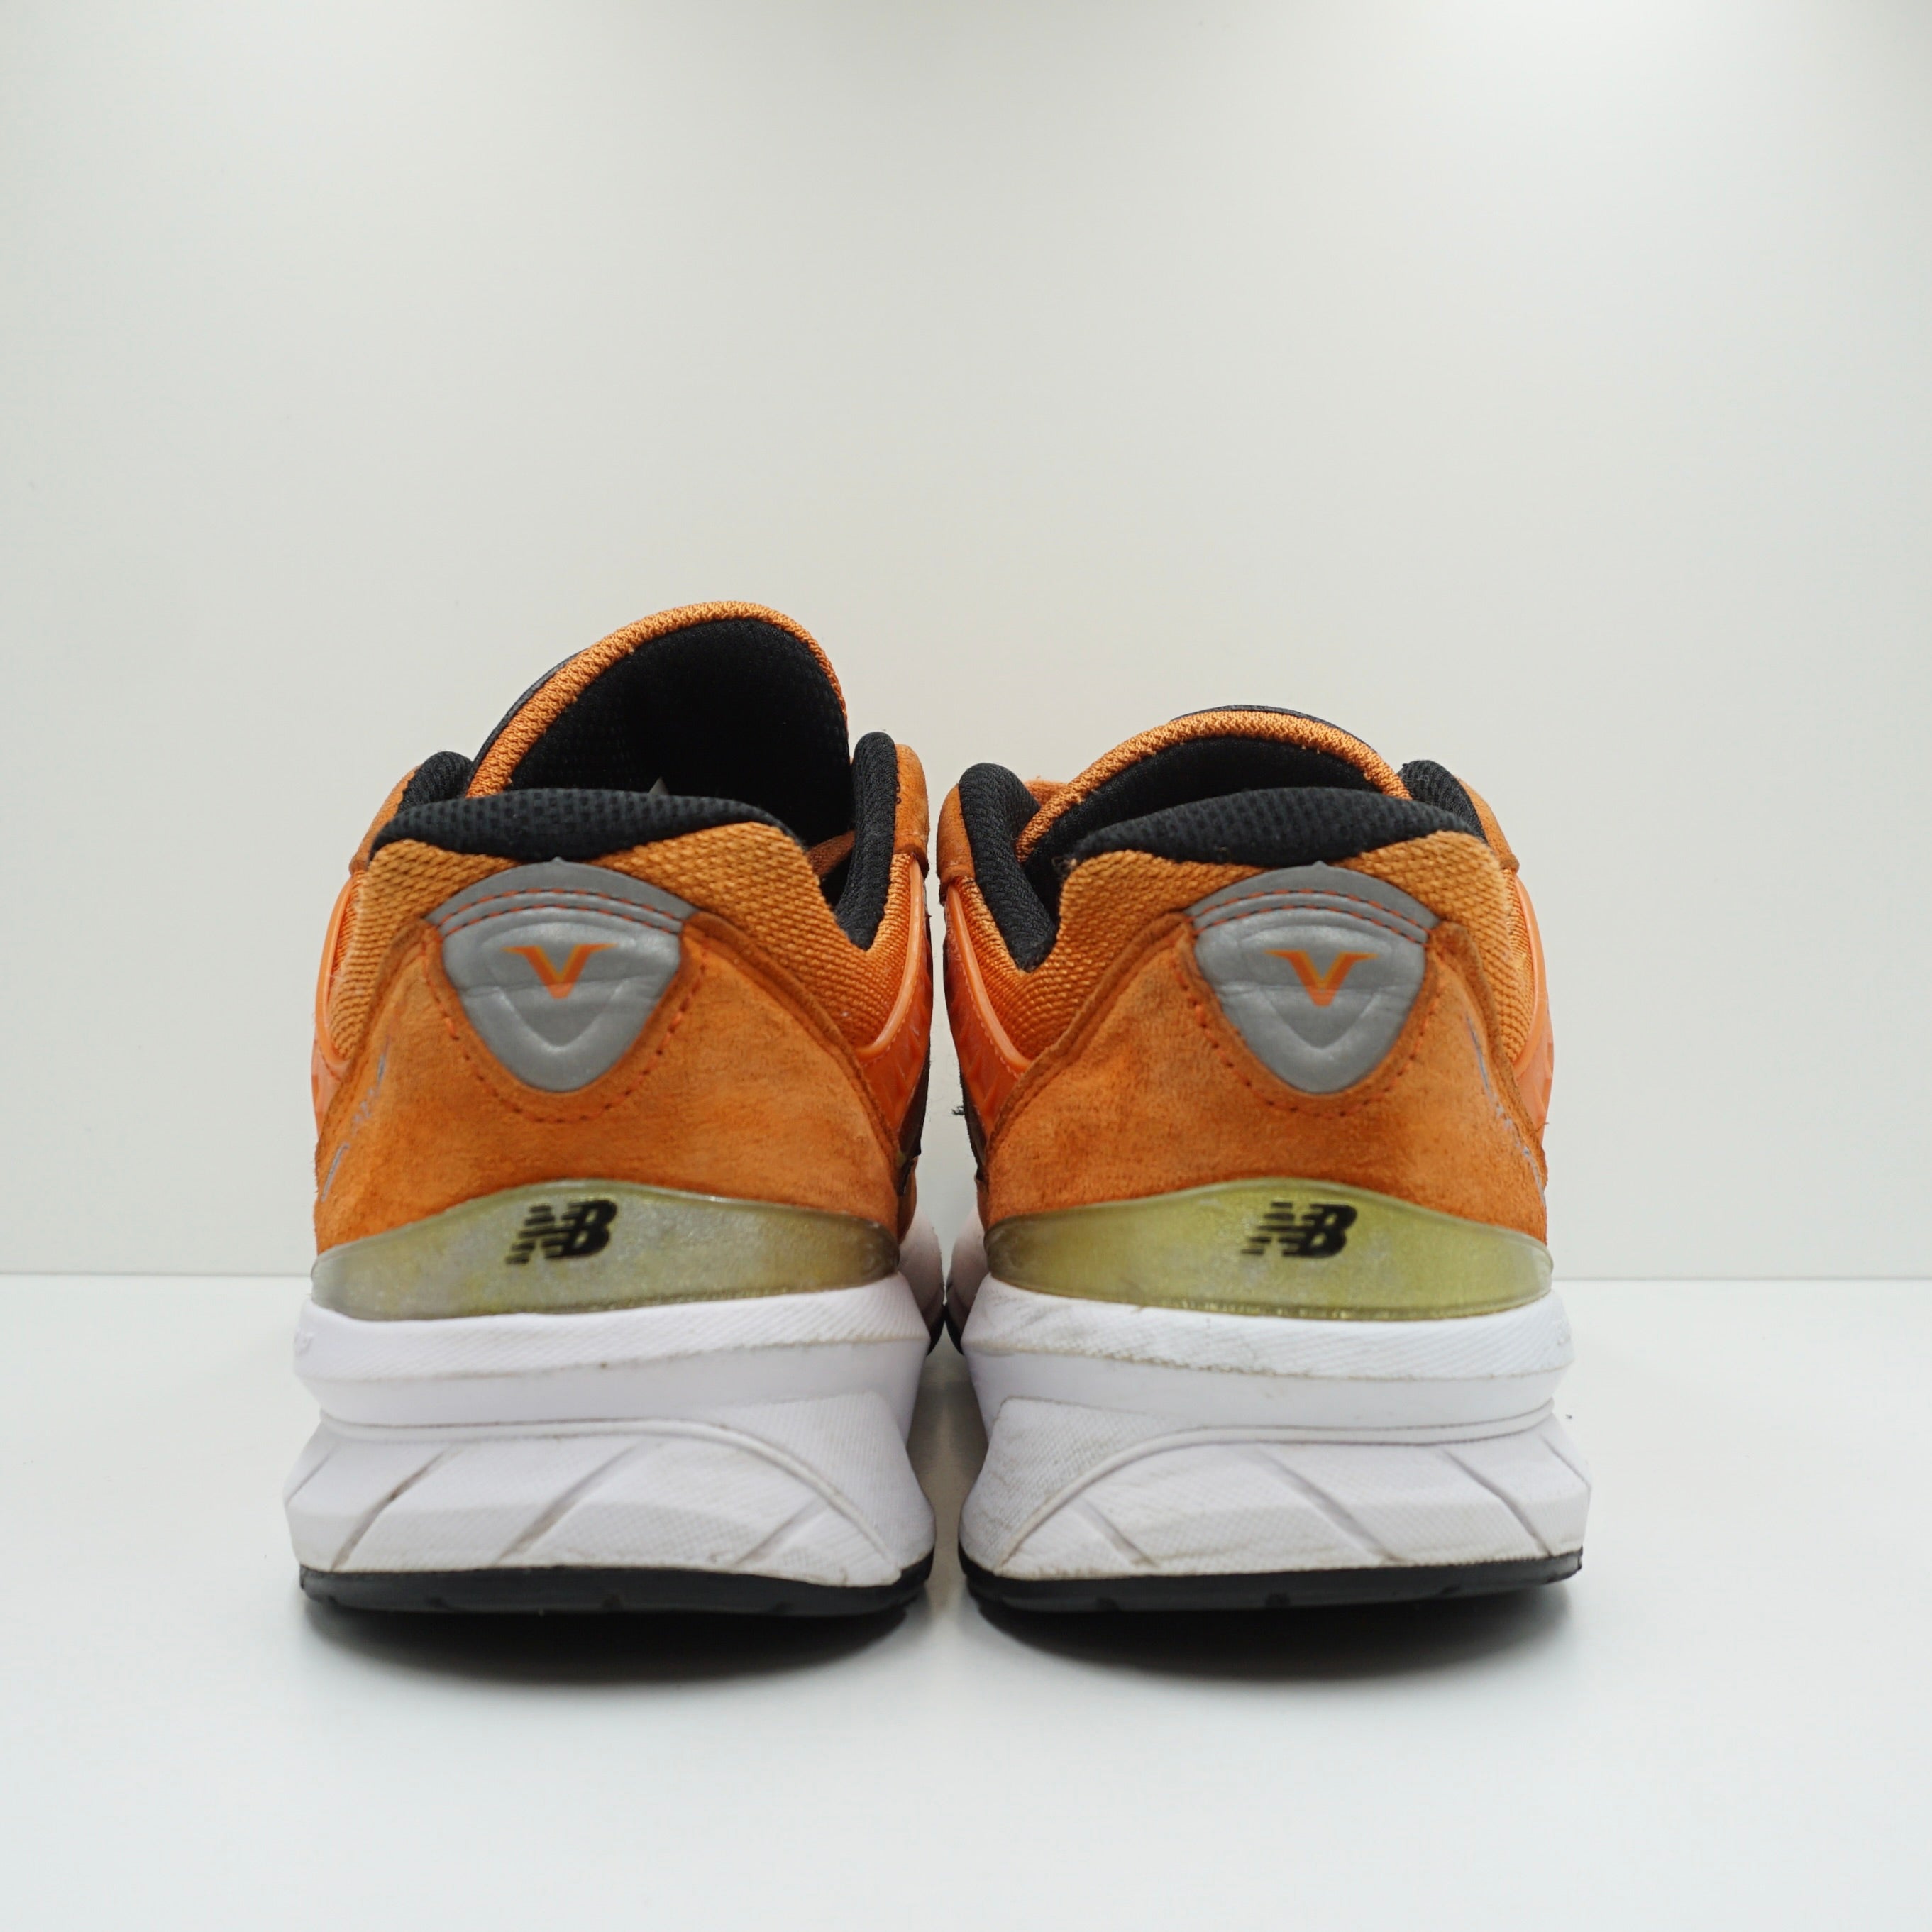 New Balance 990v5 Orange